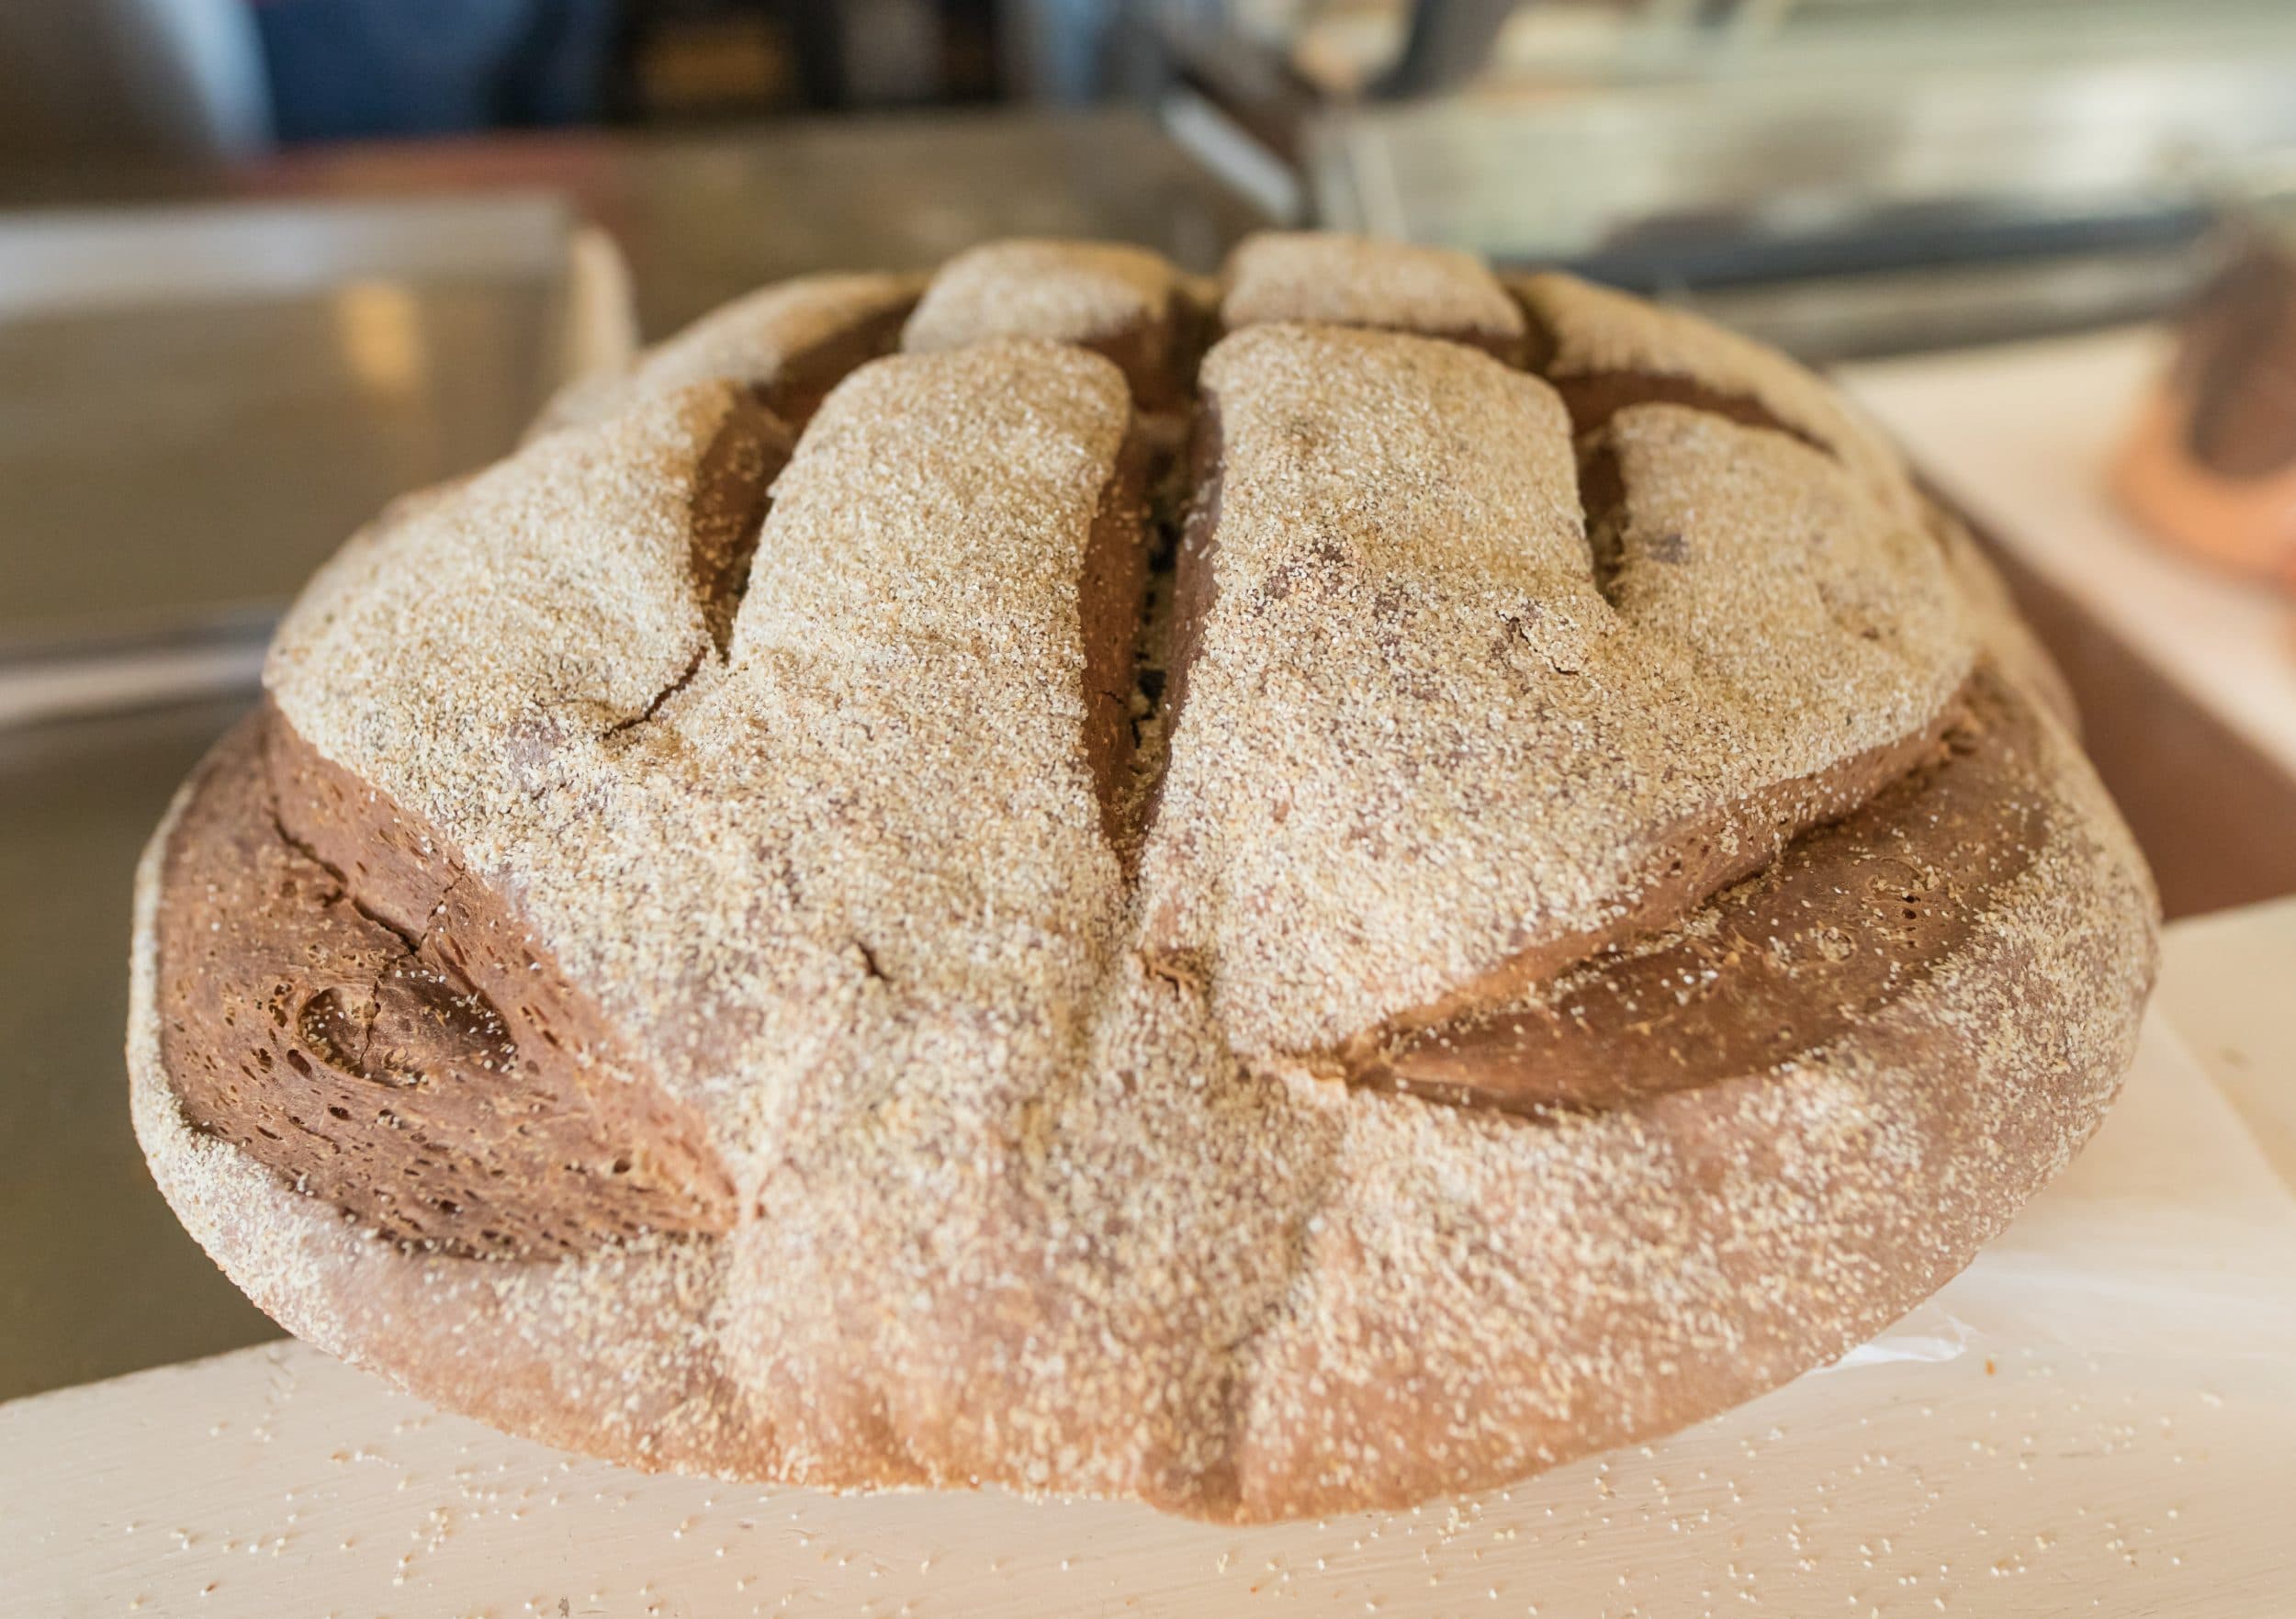 MacReady Artisan Bread- fresh baked bread